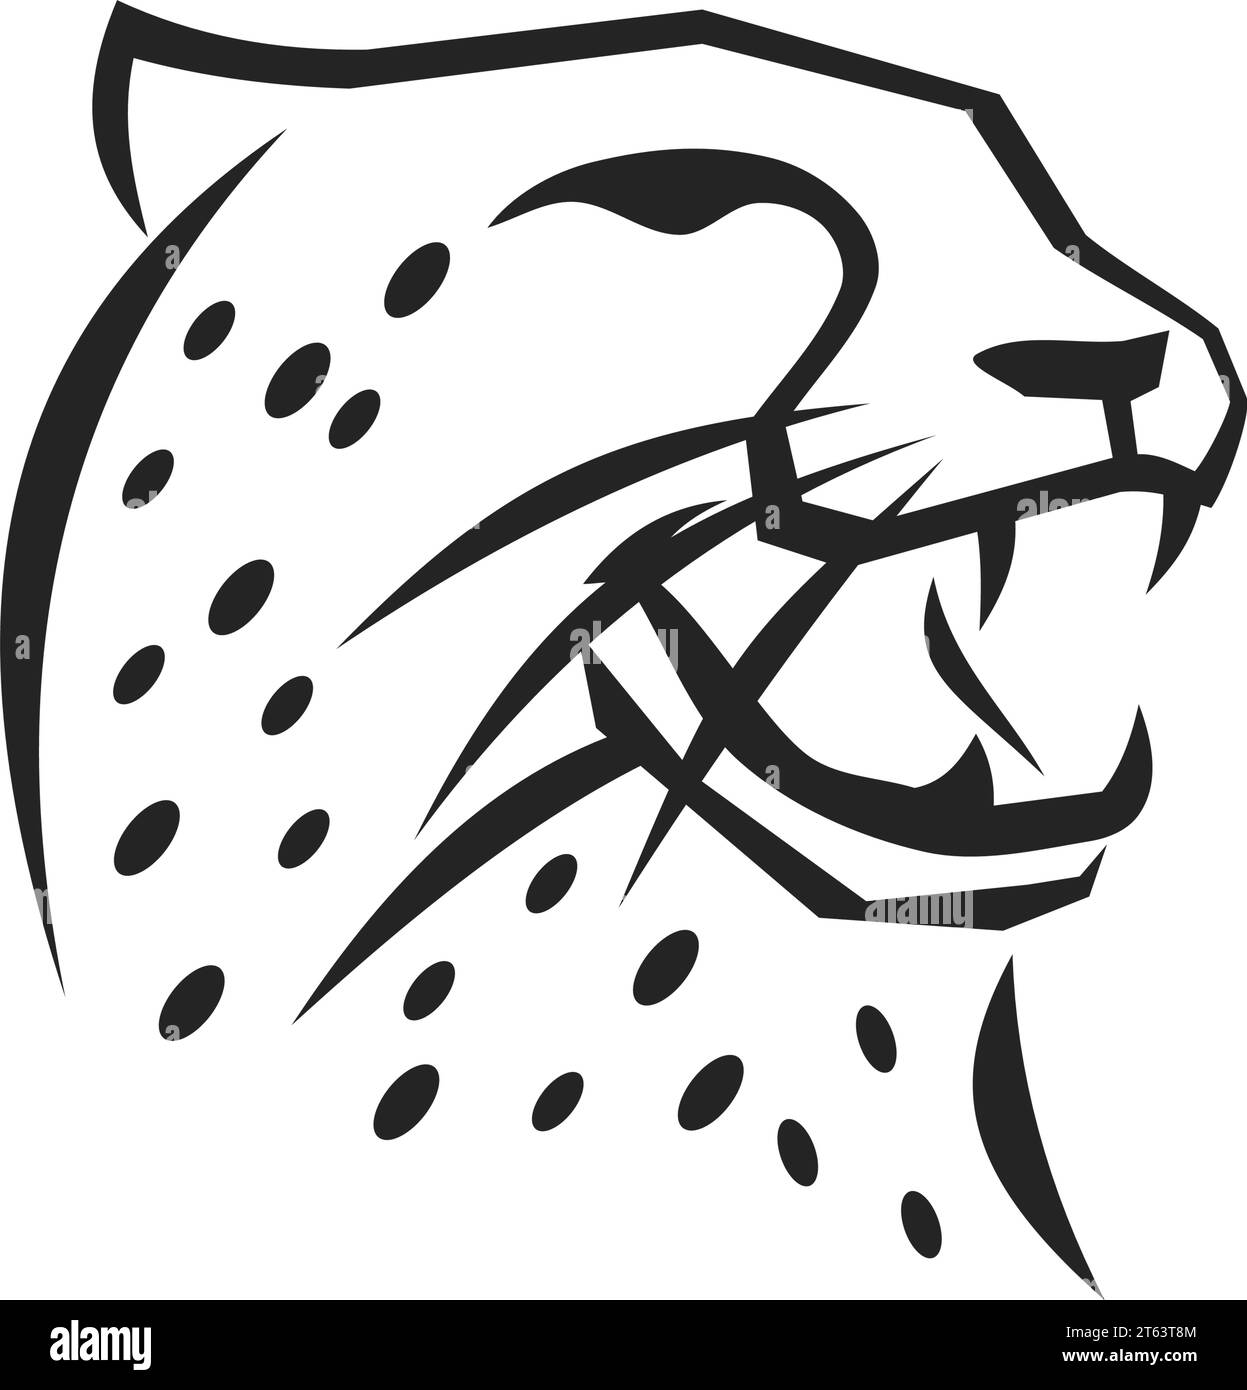 simple modern face cheetah logo symbol icon vector graphic design